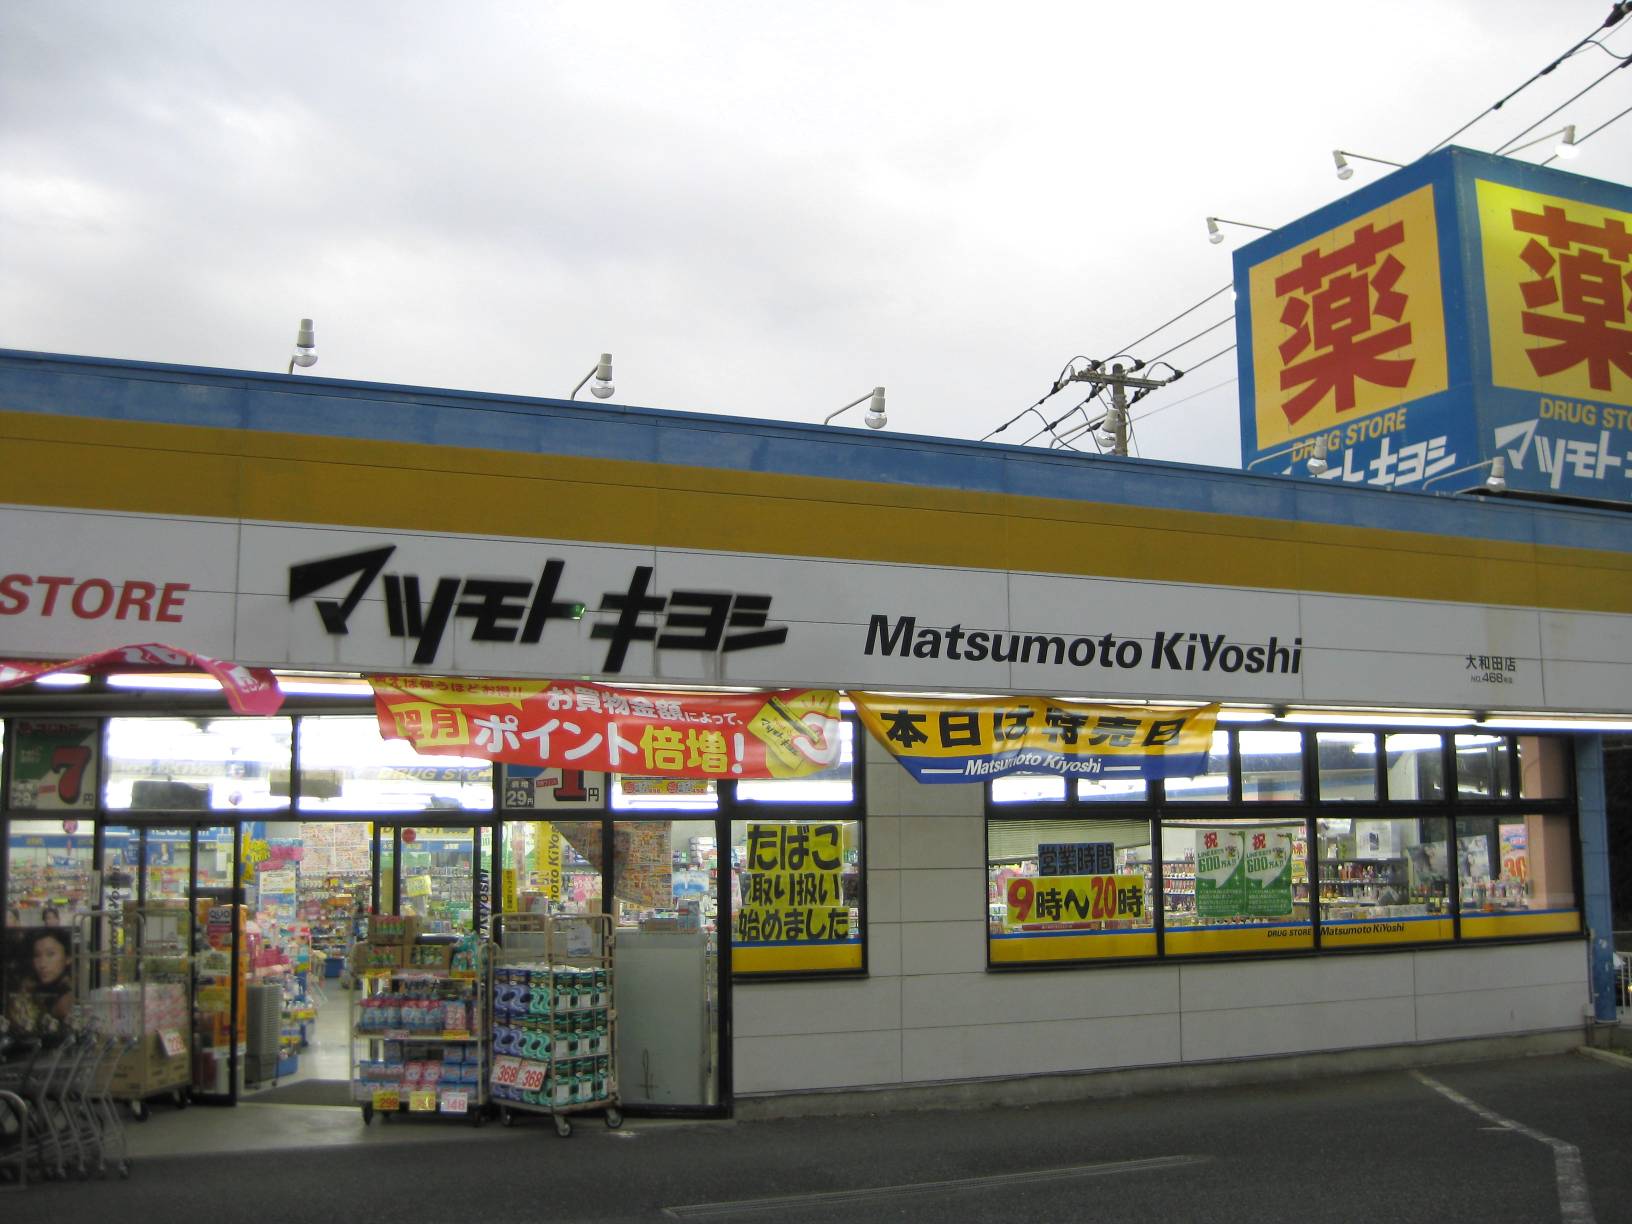 Dorakkusutoa. Drugstore Matsumotokiyoshi Owada store 909m to (drugstore)